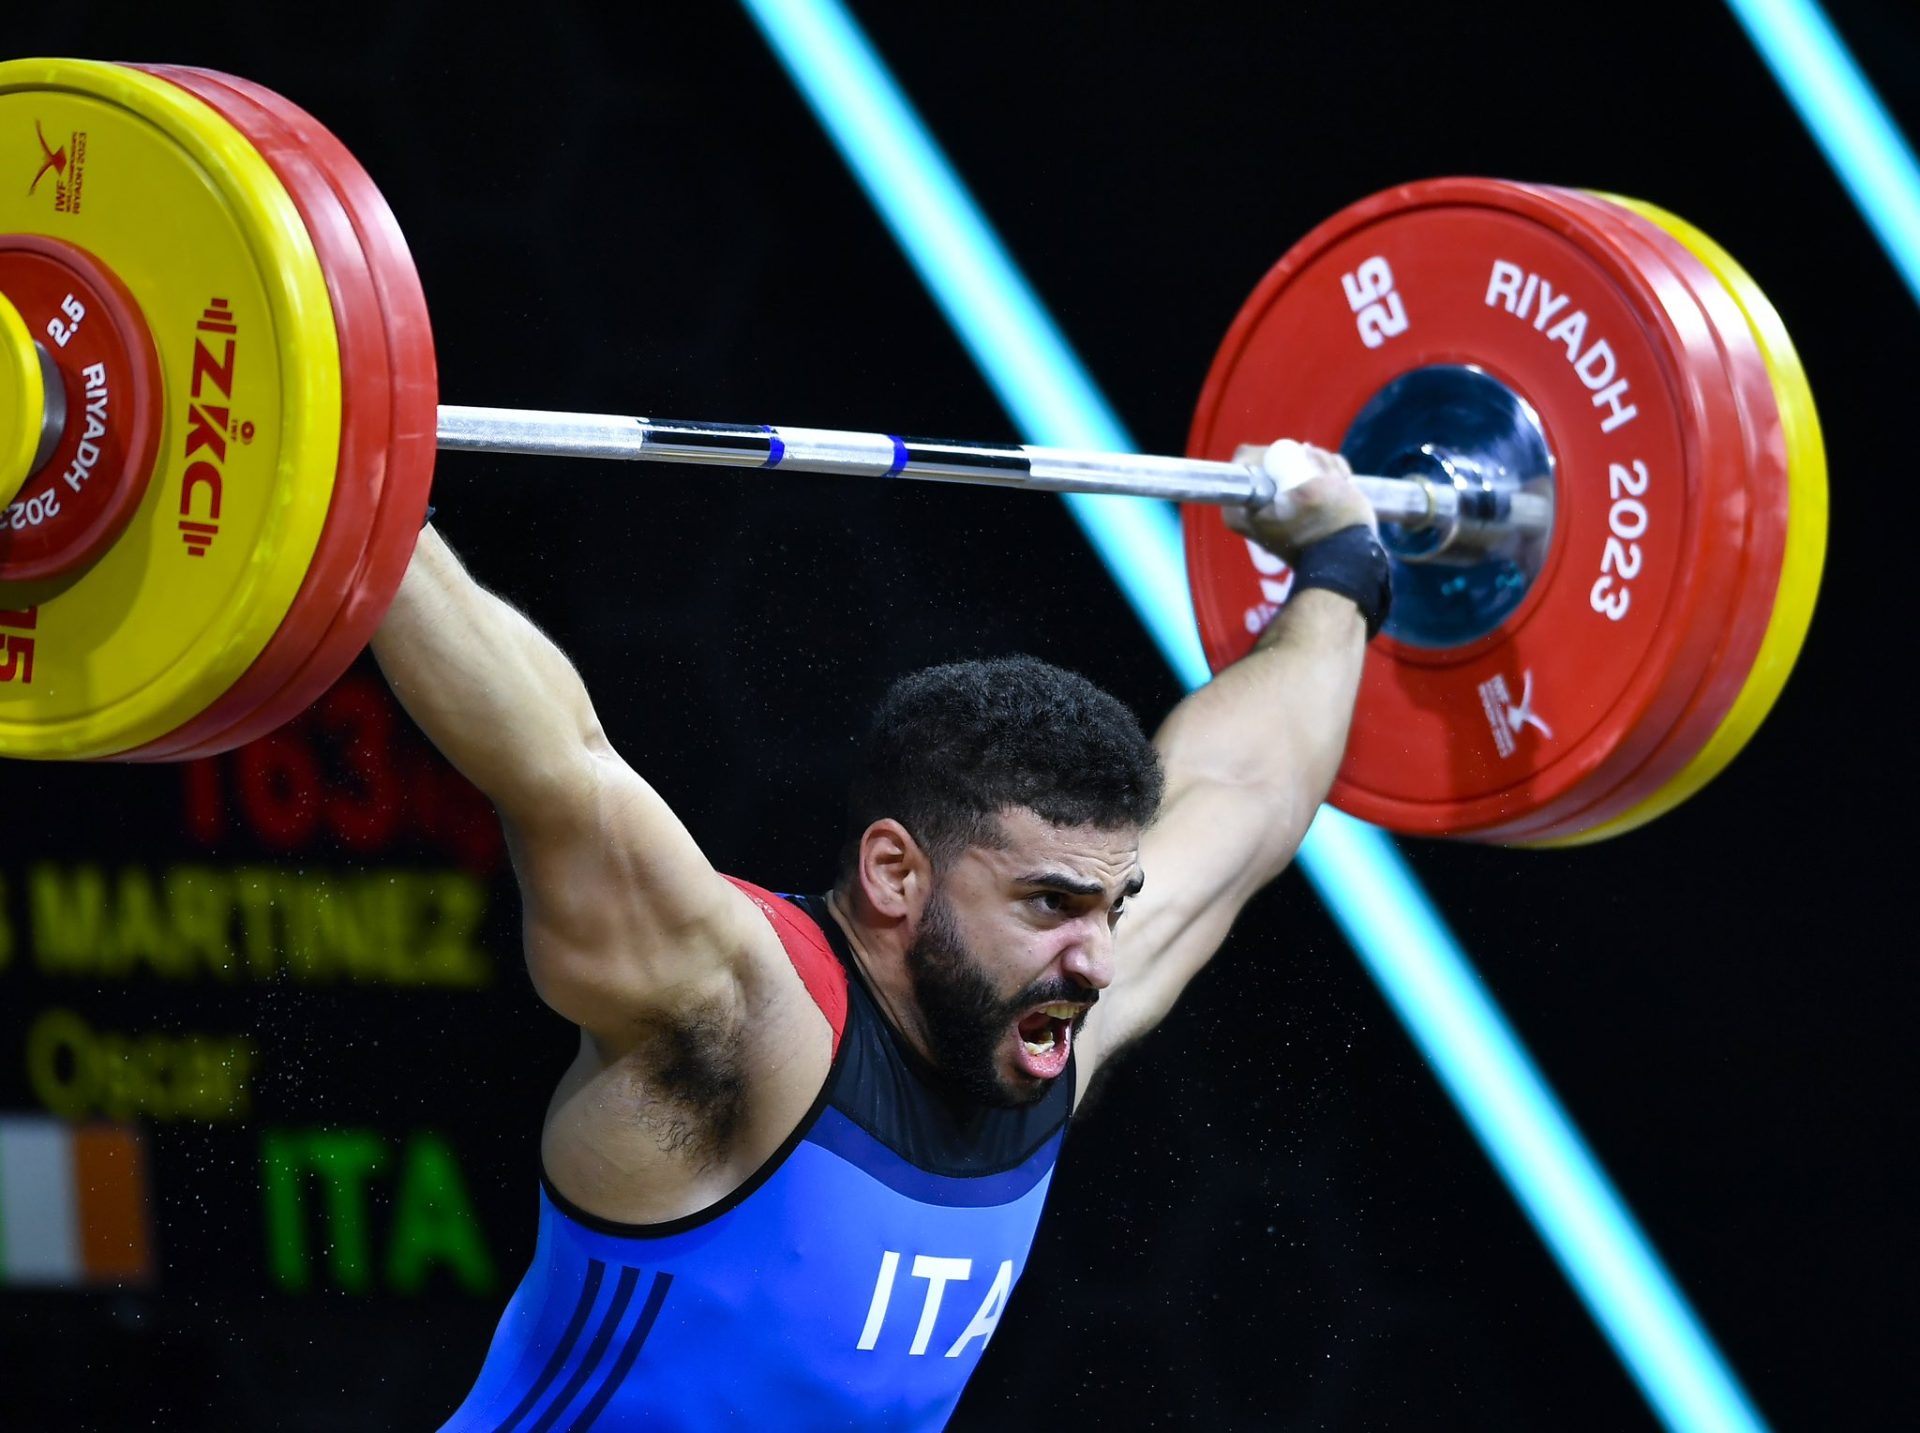 The Cuban-Italian Oscar Reyes was one of the revelations of the World Weightlifting Championship in Riyadh. Photo: @Weightliftingsa